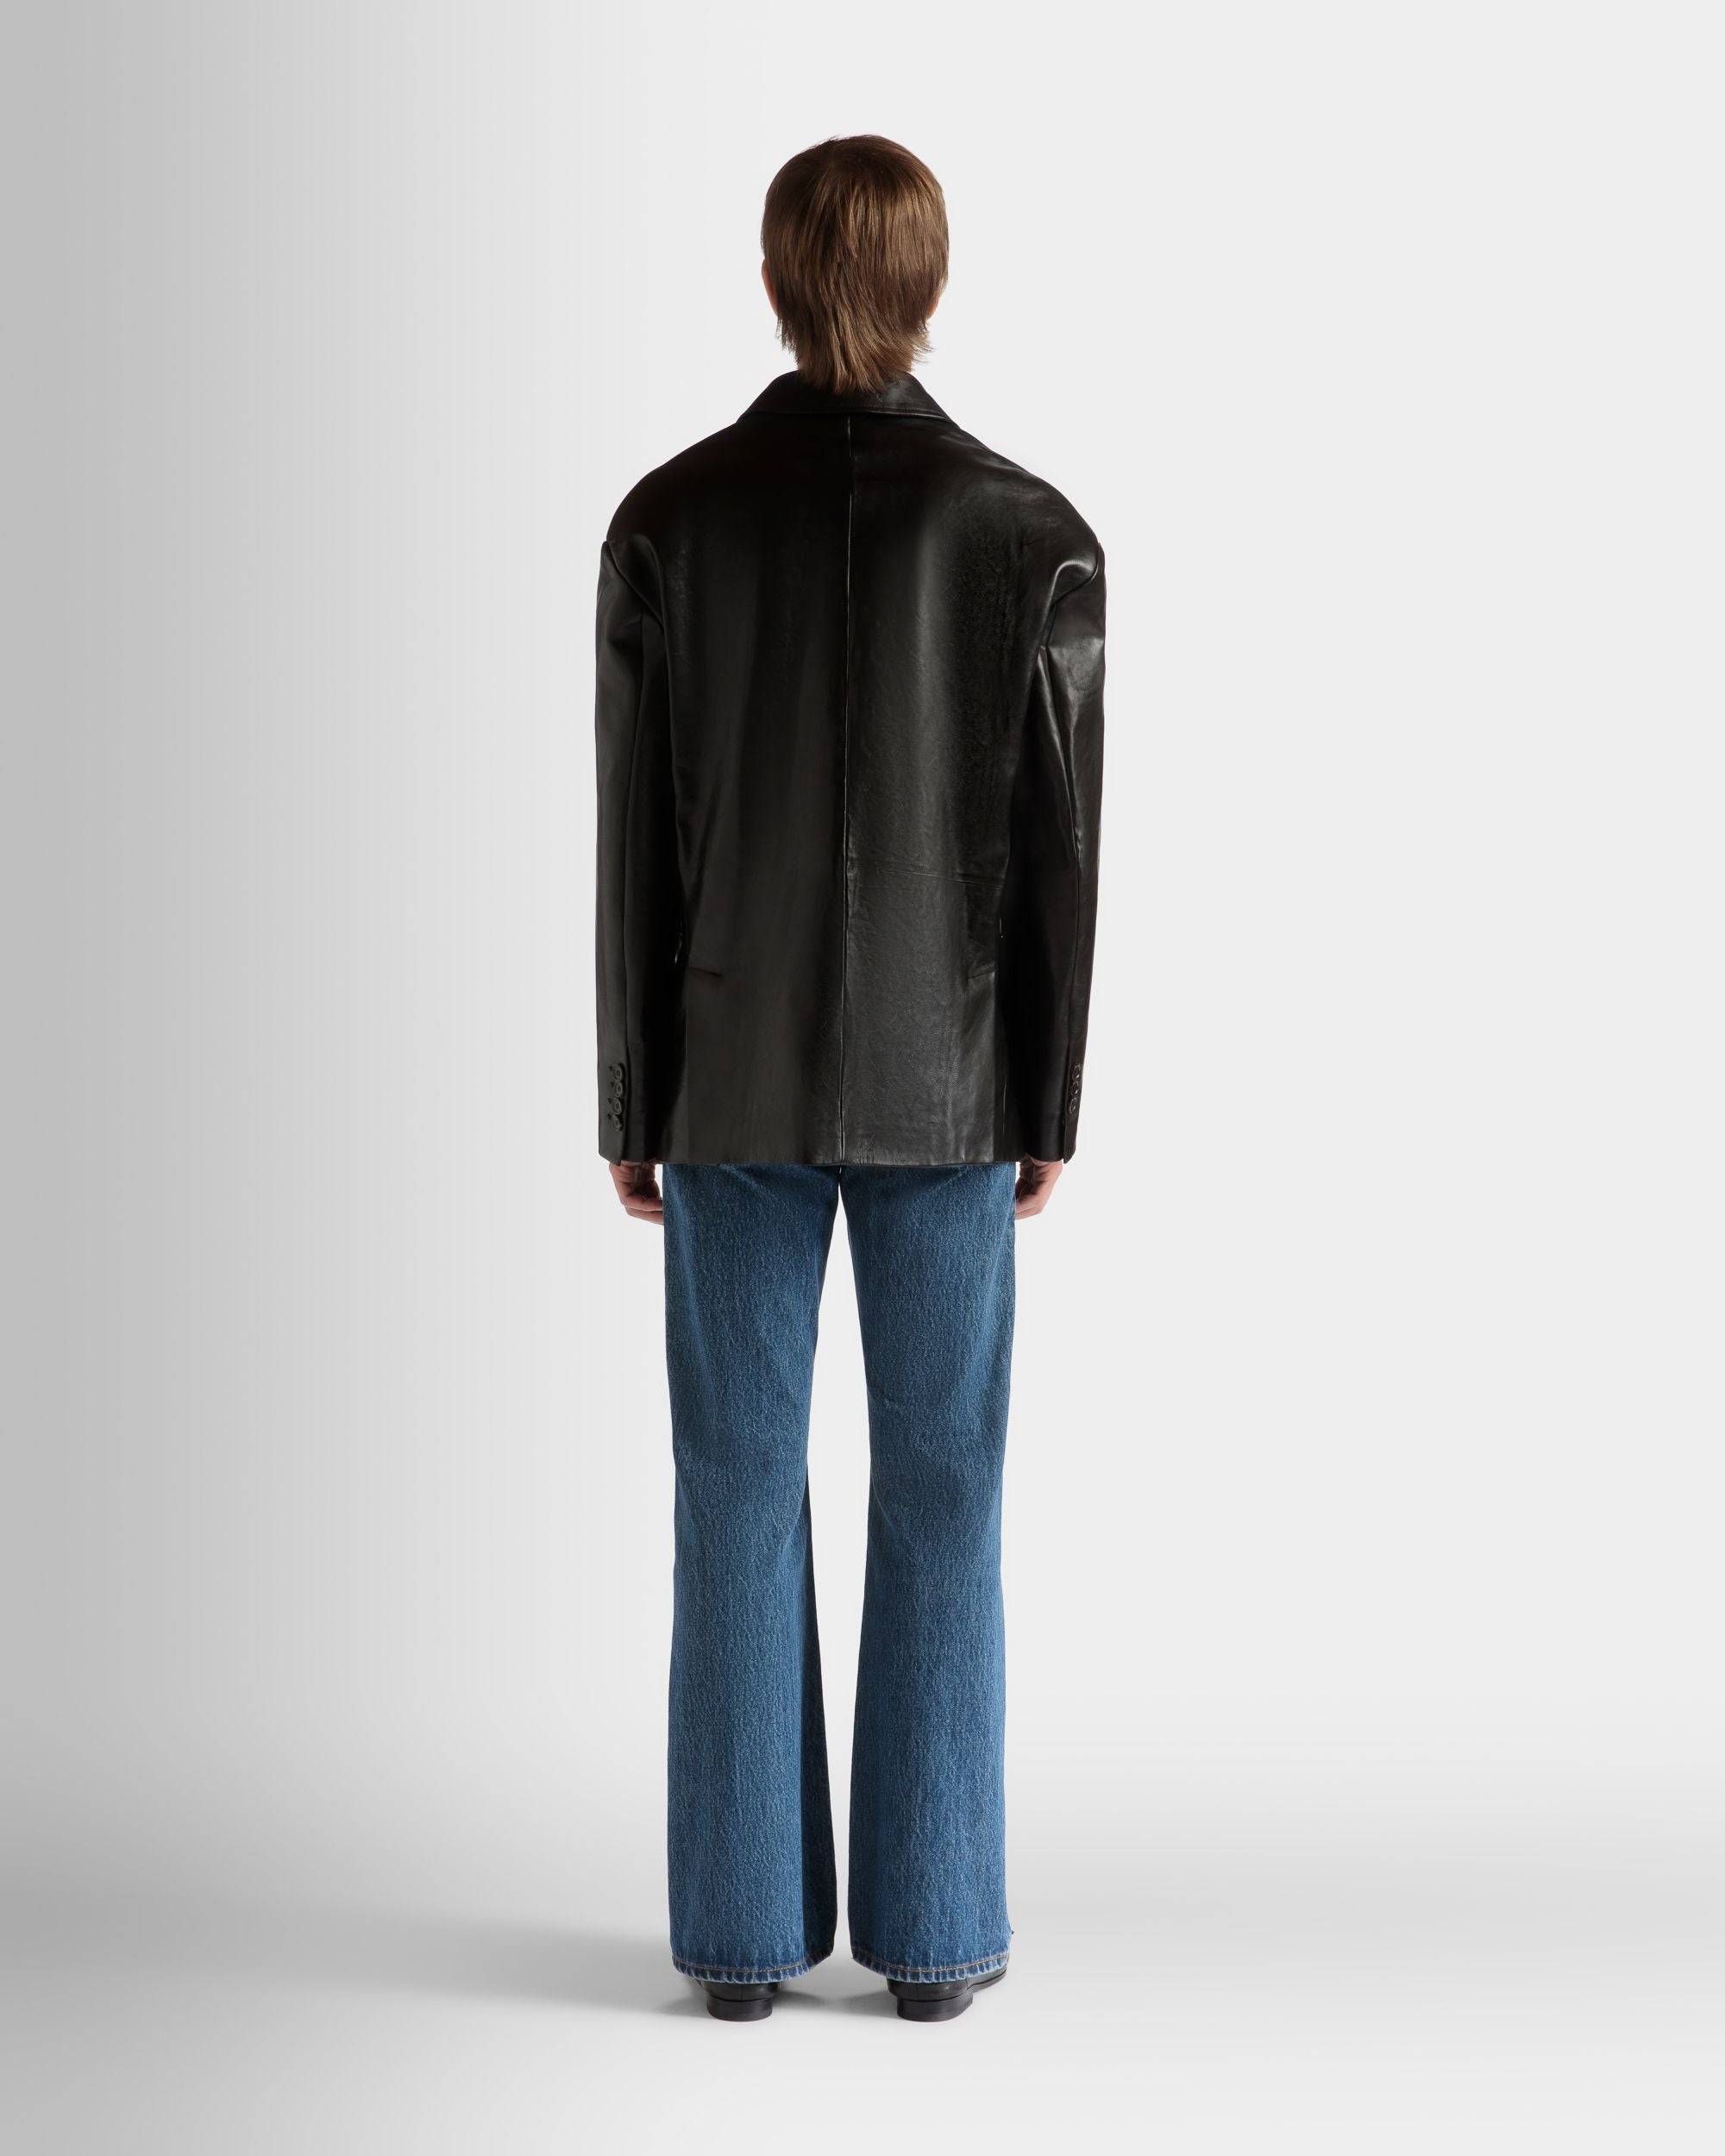 Jacket in Black Leather - Men's - Bally - 06